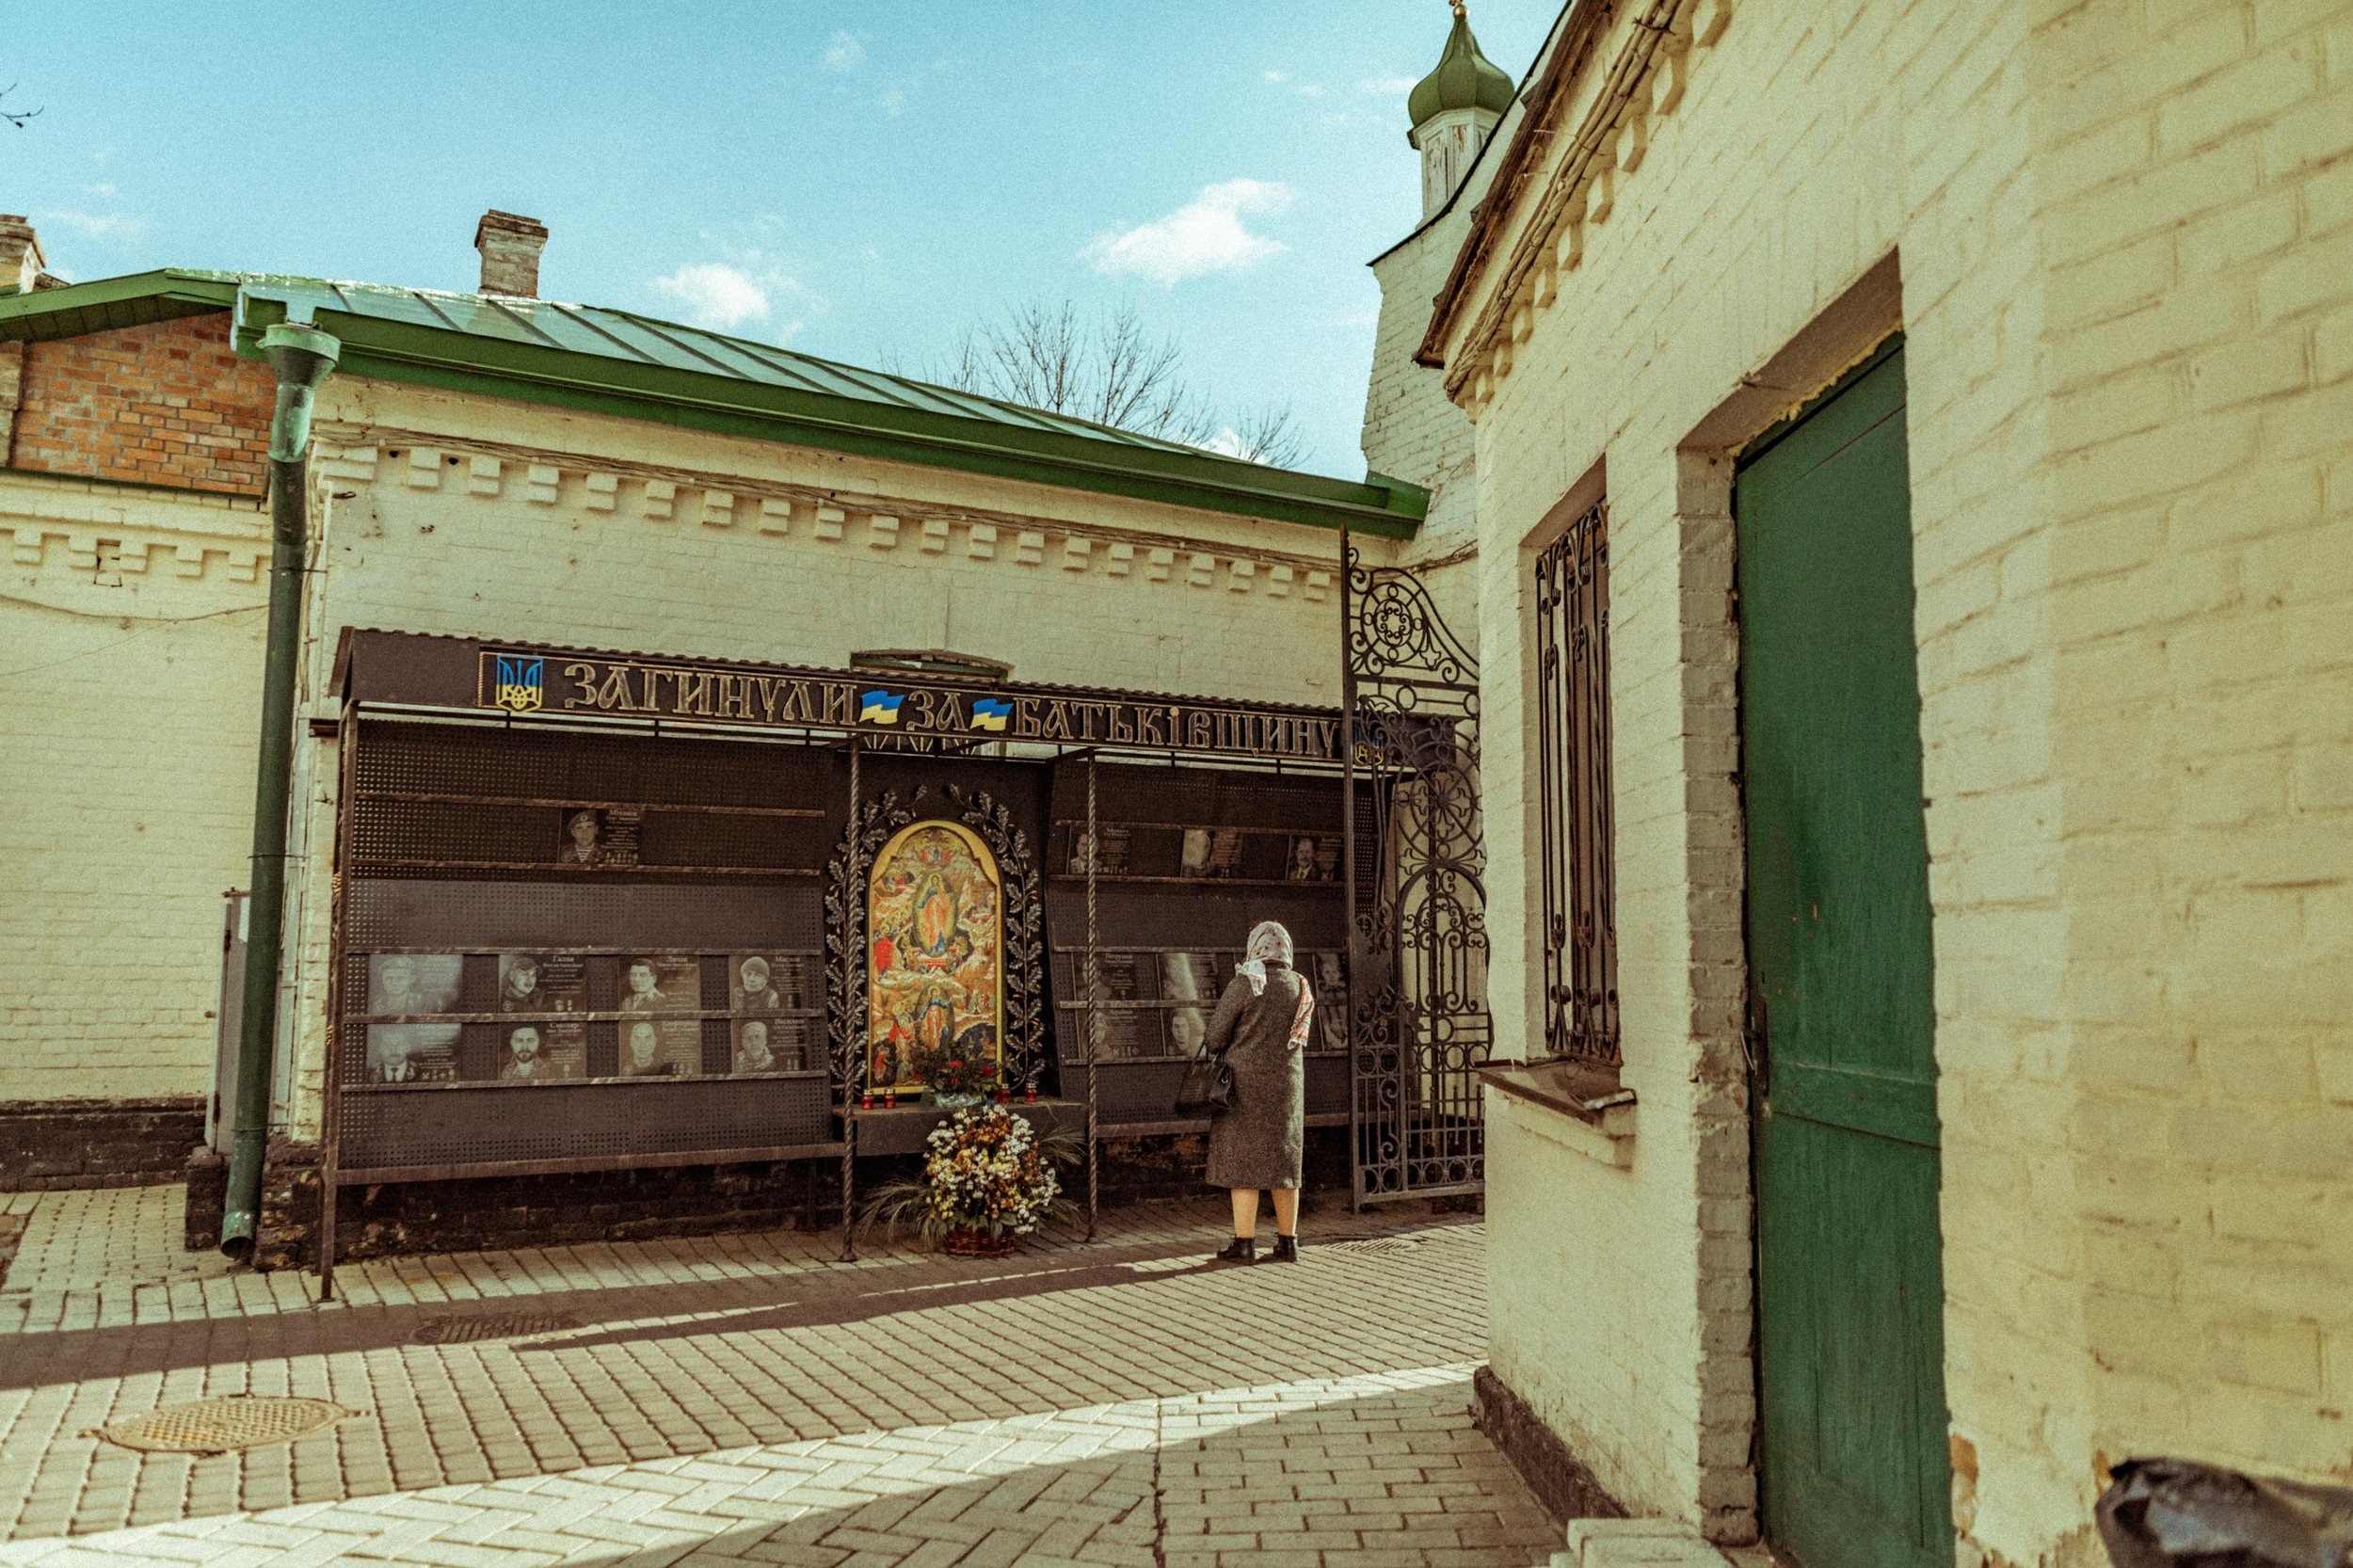 2019-3-9 Kiev, Urkaine - Jack Robert Photography (32 of 54).jpg